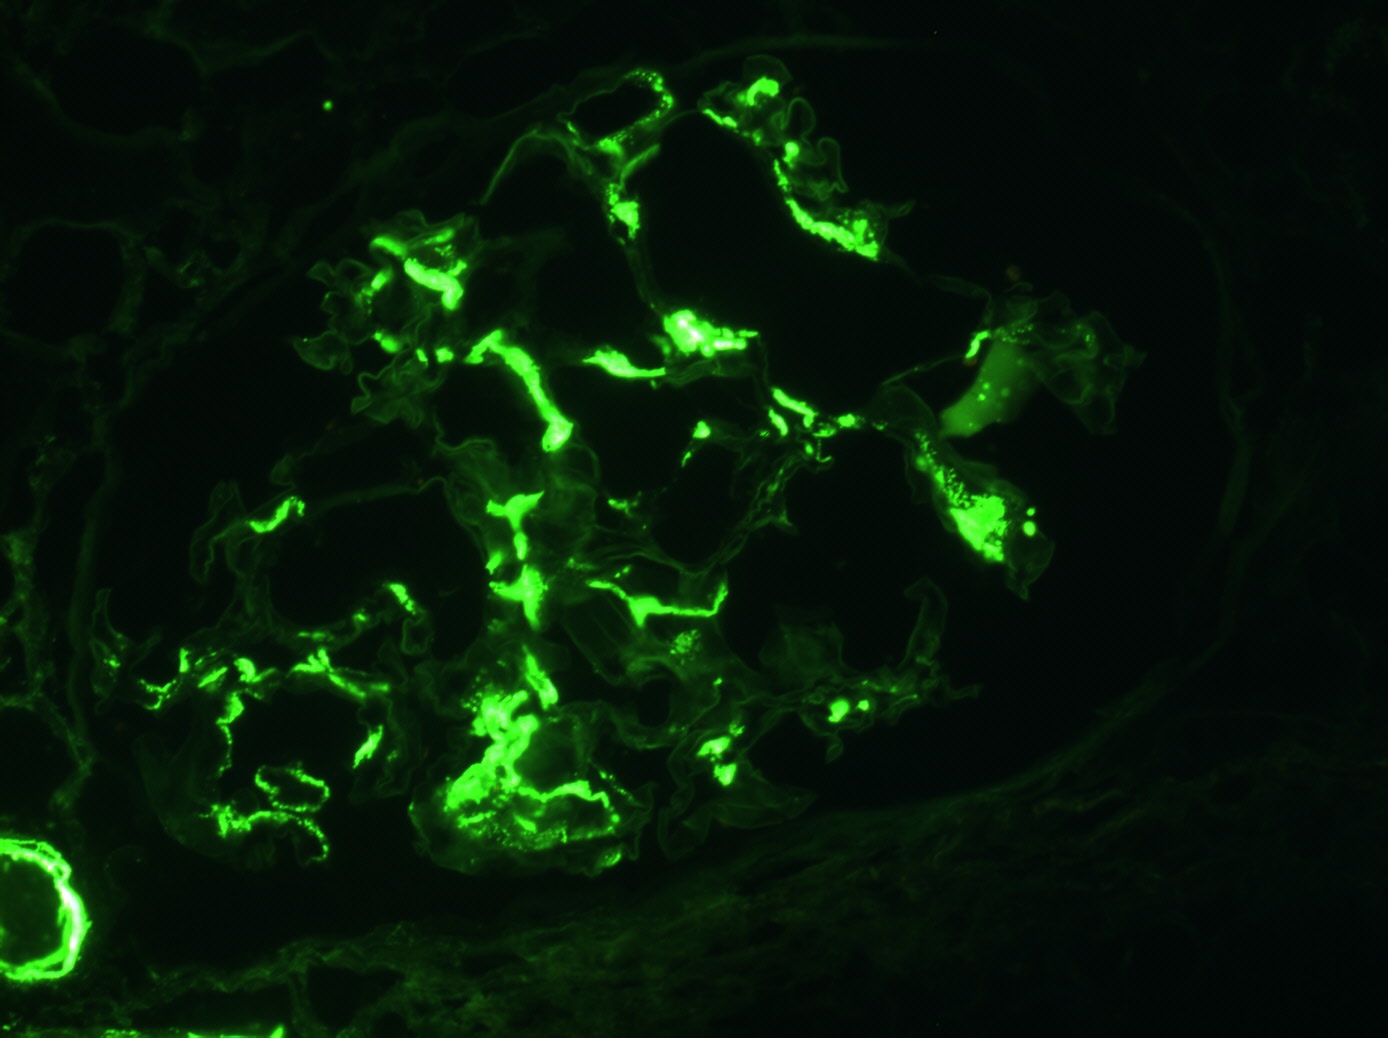 Mesangial IgA deposition, immunofluorescence